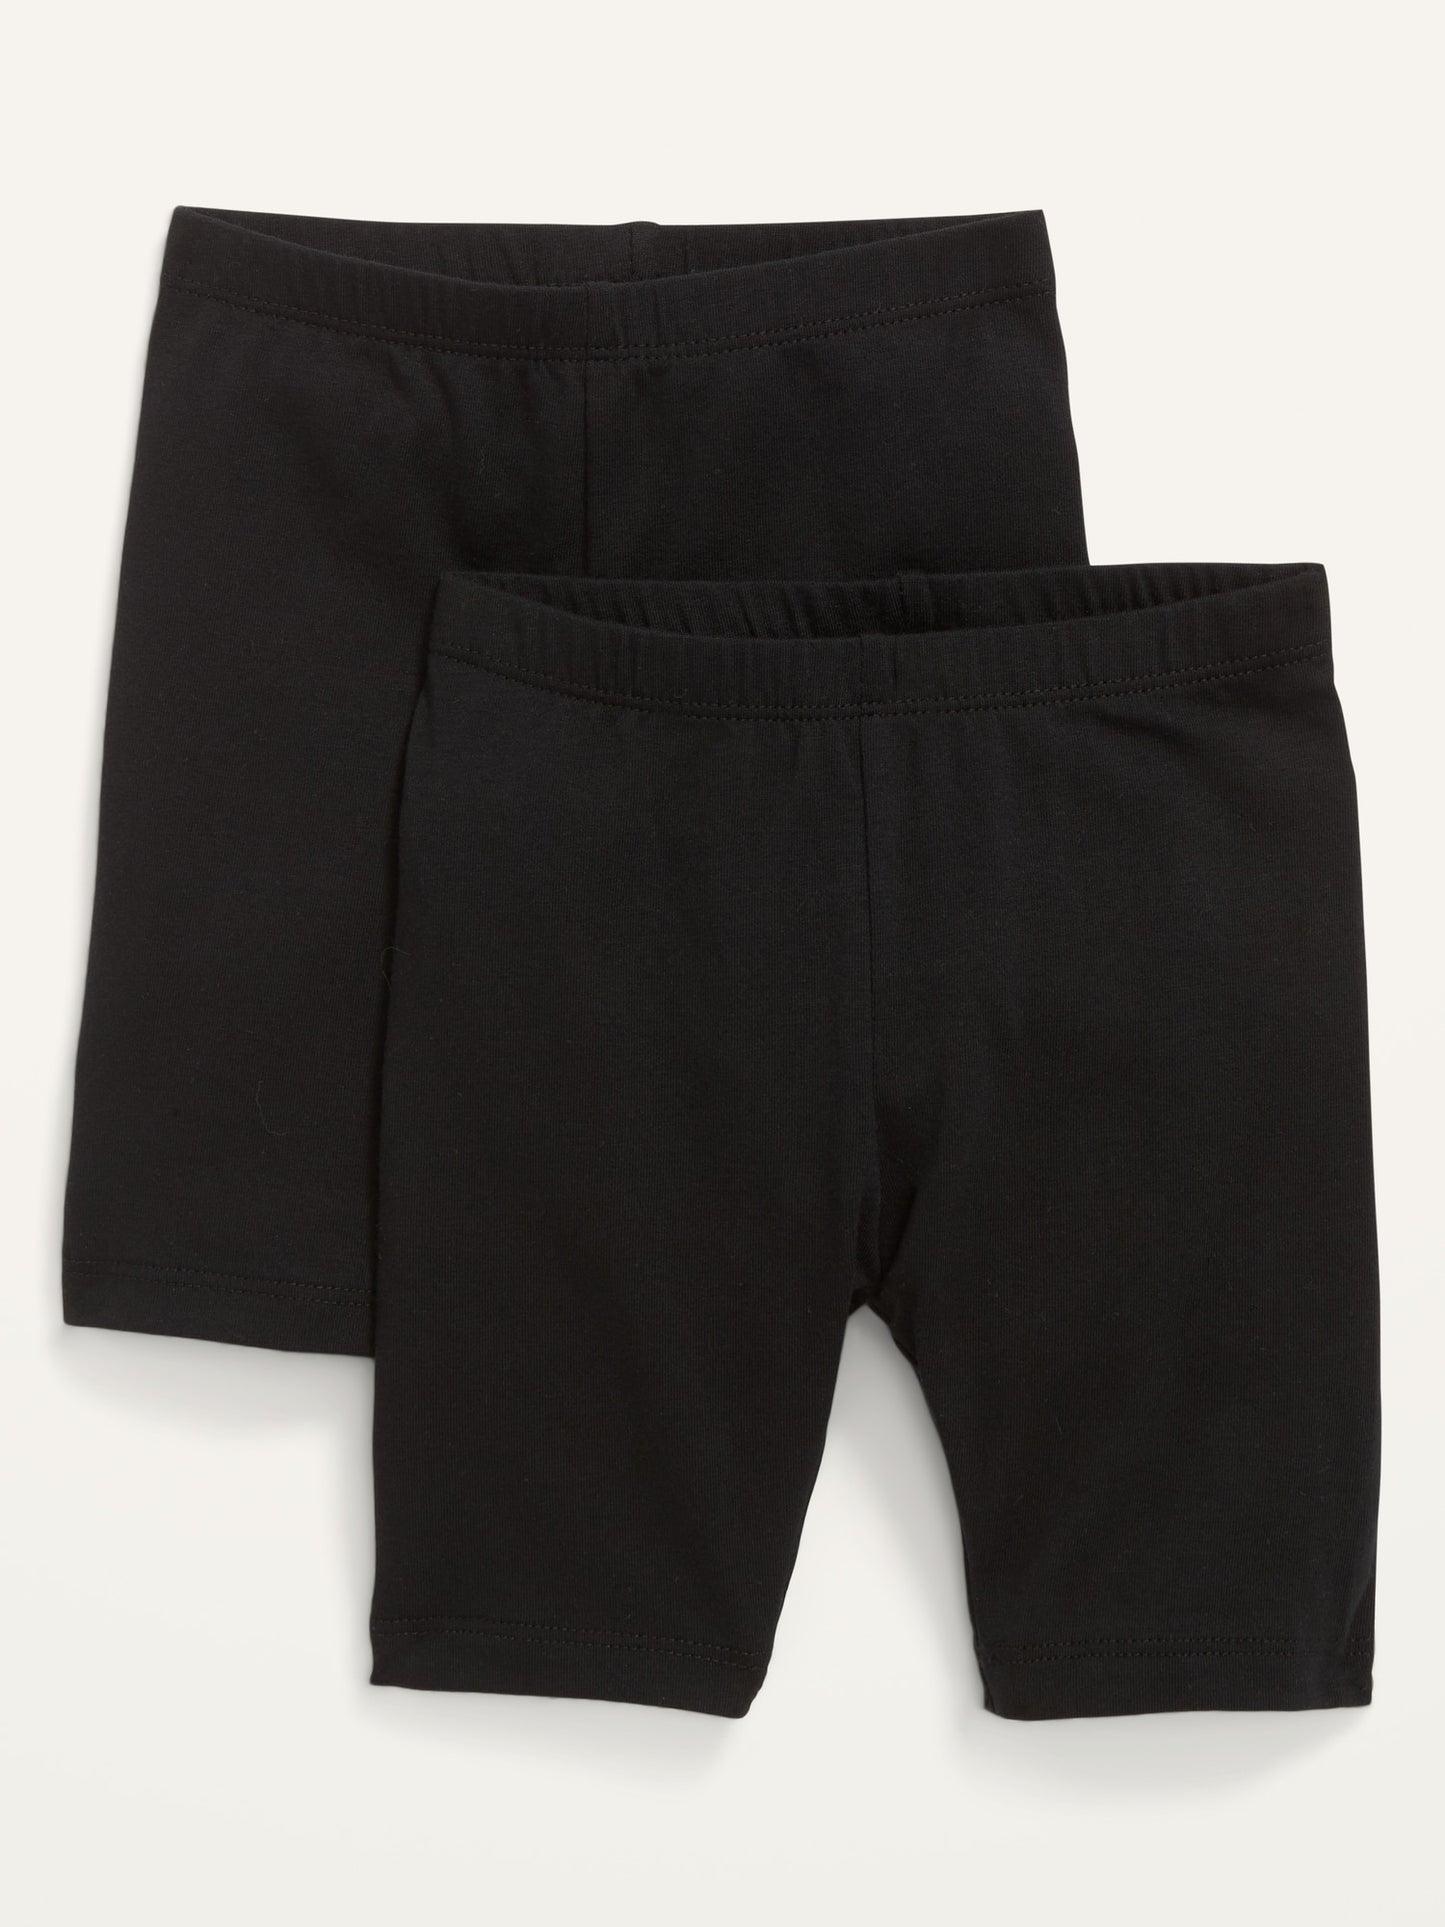 ON Mid-Length Biker Shorts 2-Pack For Toddler Girls - Black Jack - Exclusivo de la Tienda en Línea